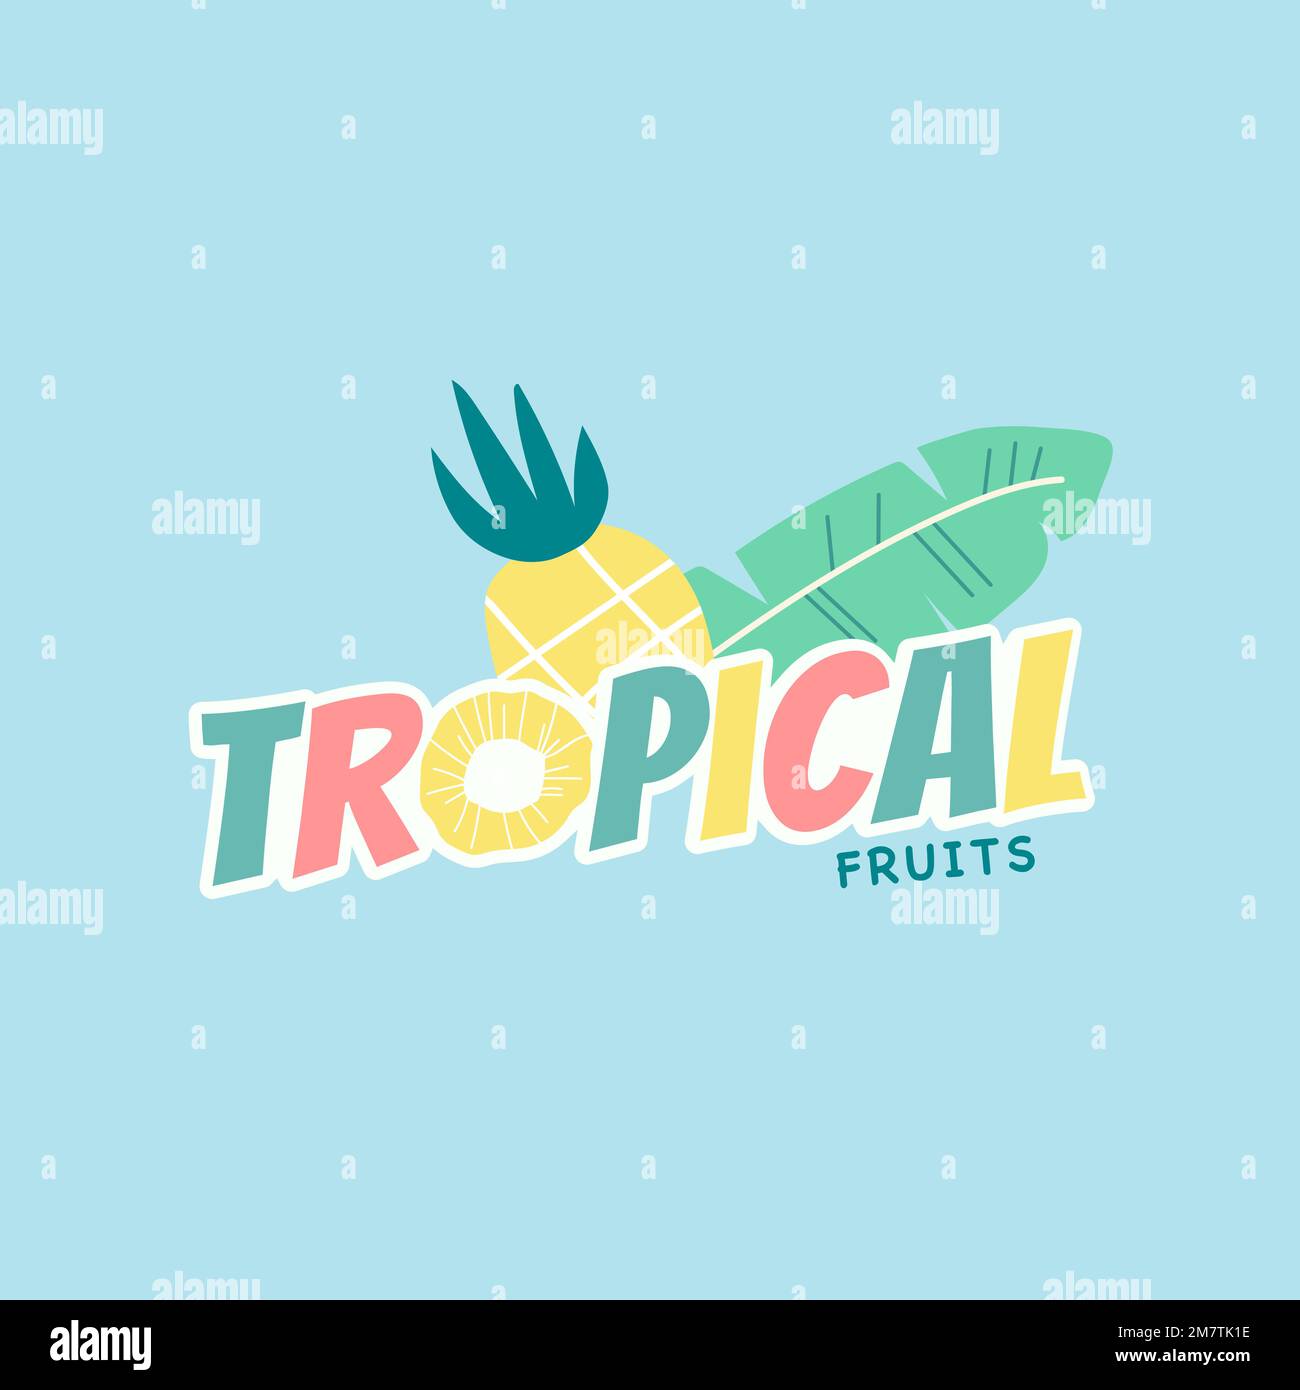 Farbenfrohe tropische Ananasfrucht-Vektor Stock Vektor